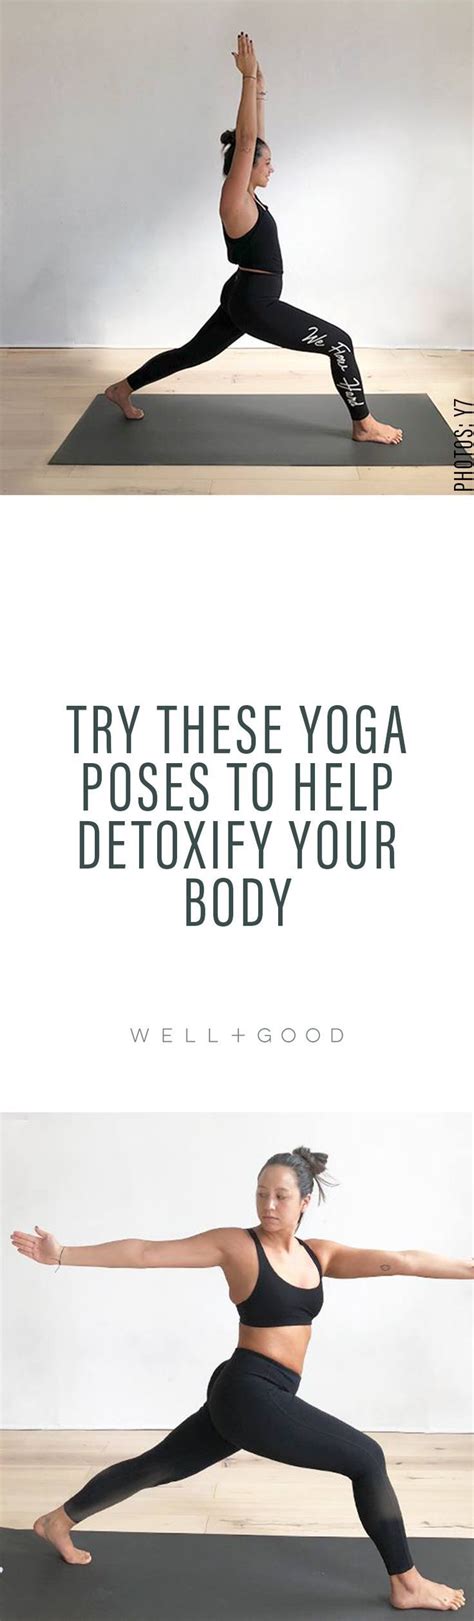 yoga poses   detoxify  body wellgood yoga poses fitness